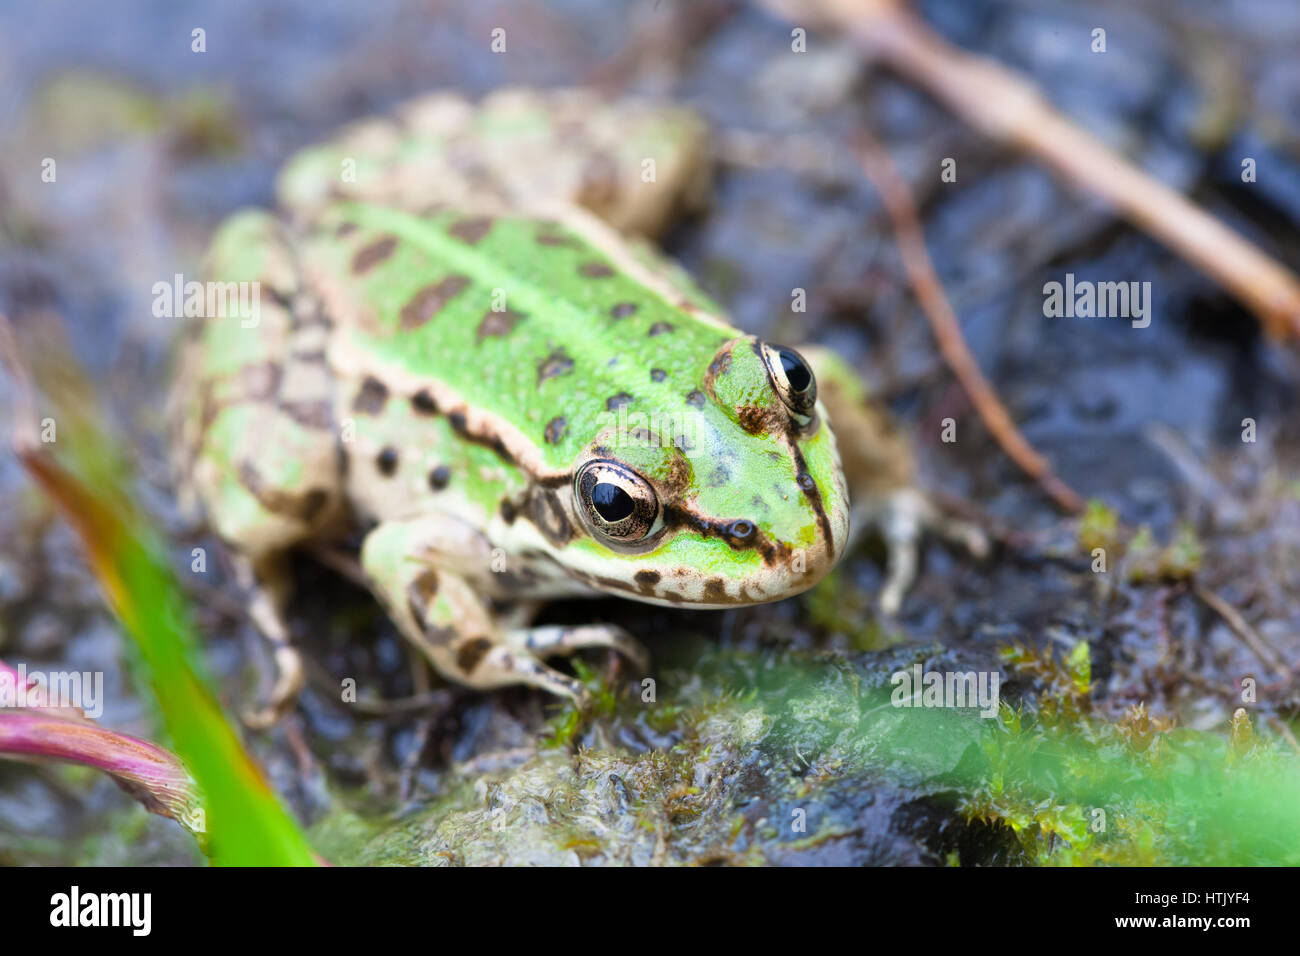 The Edible frog (Rana ridibunda) Stock Photo